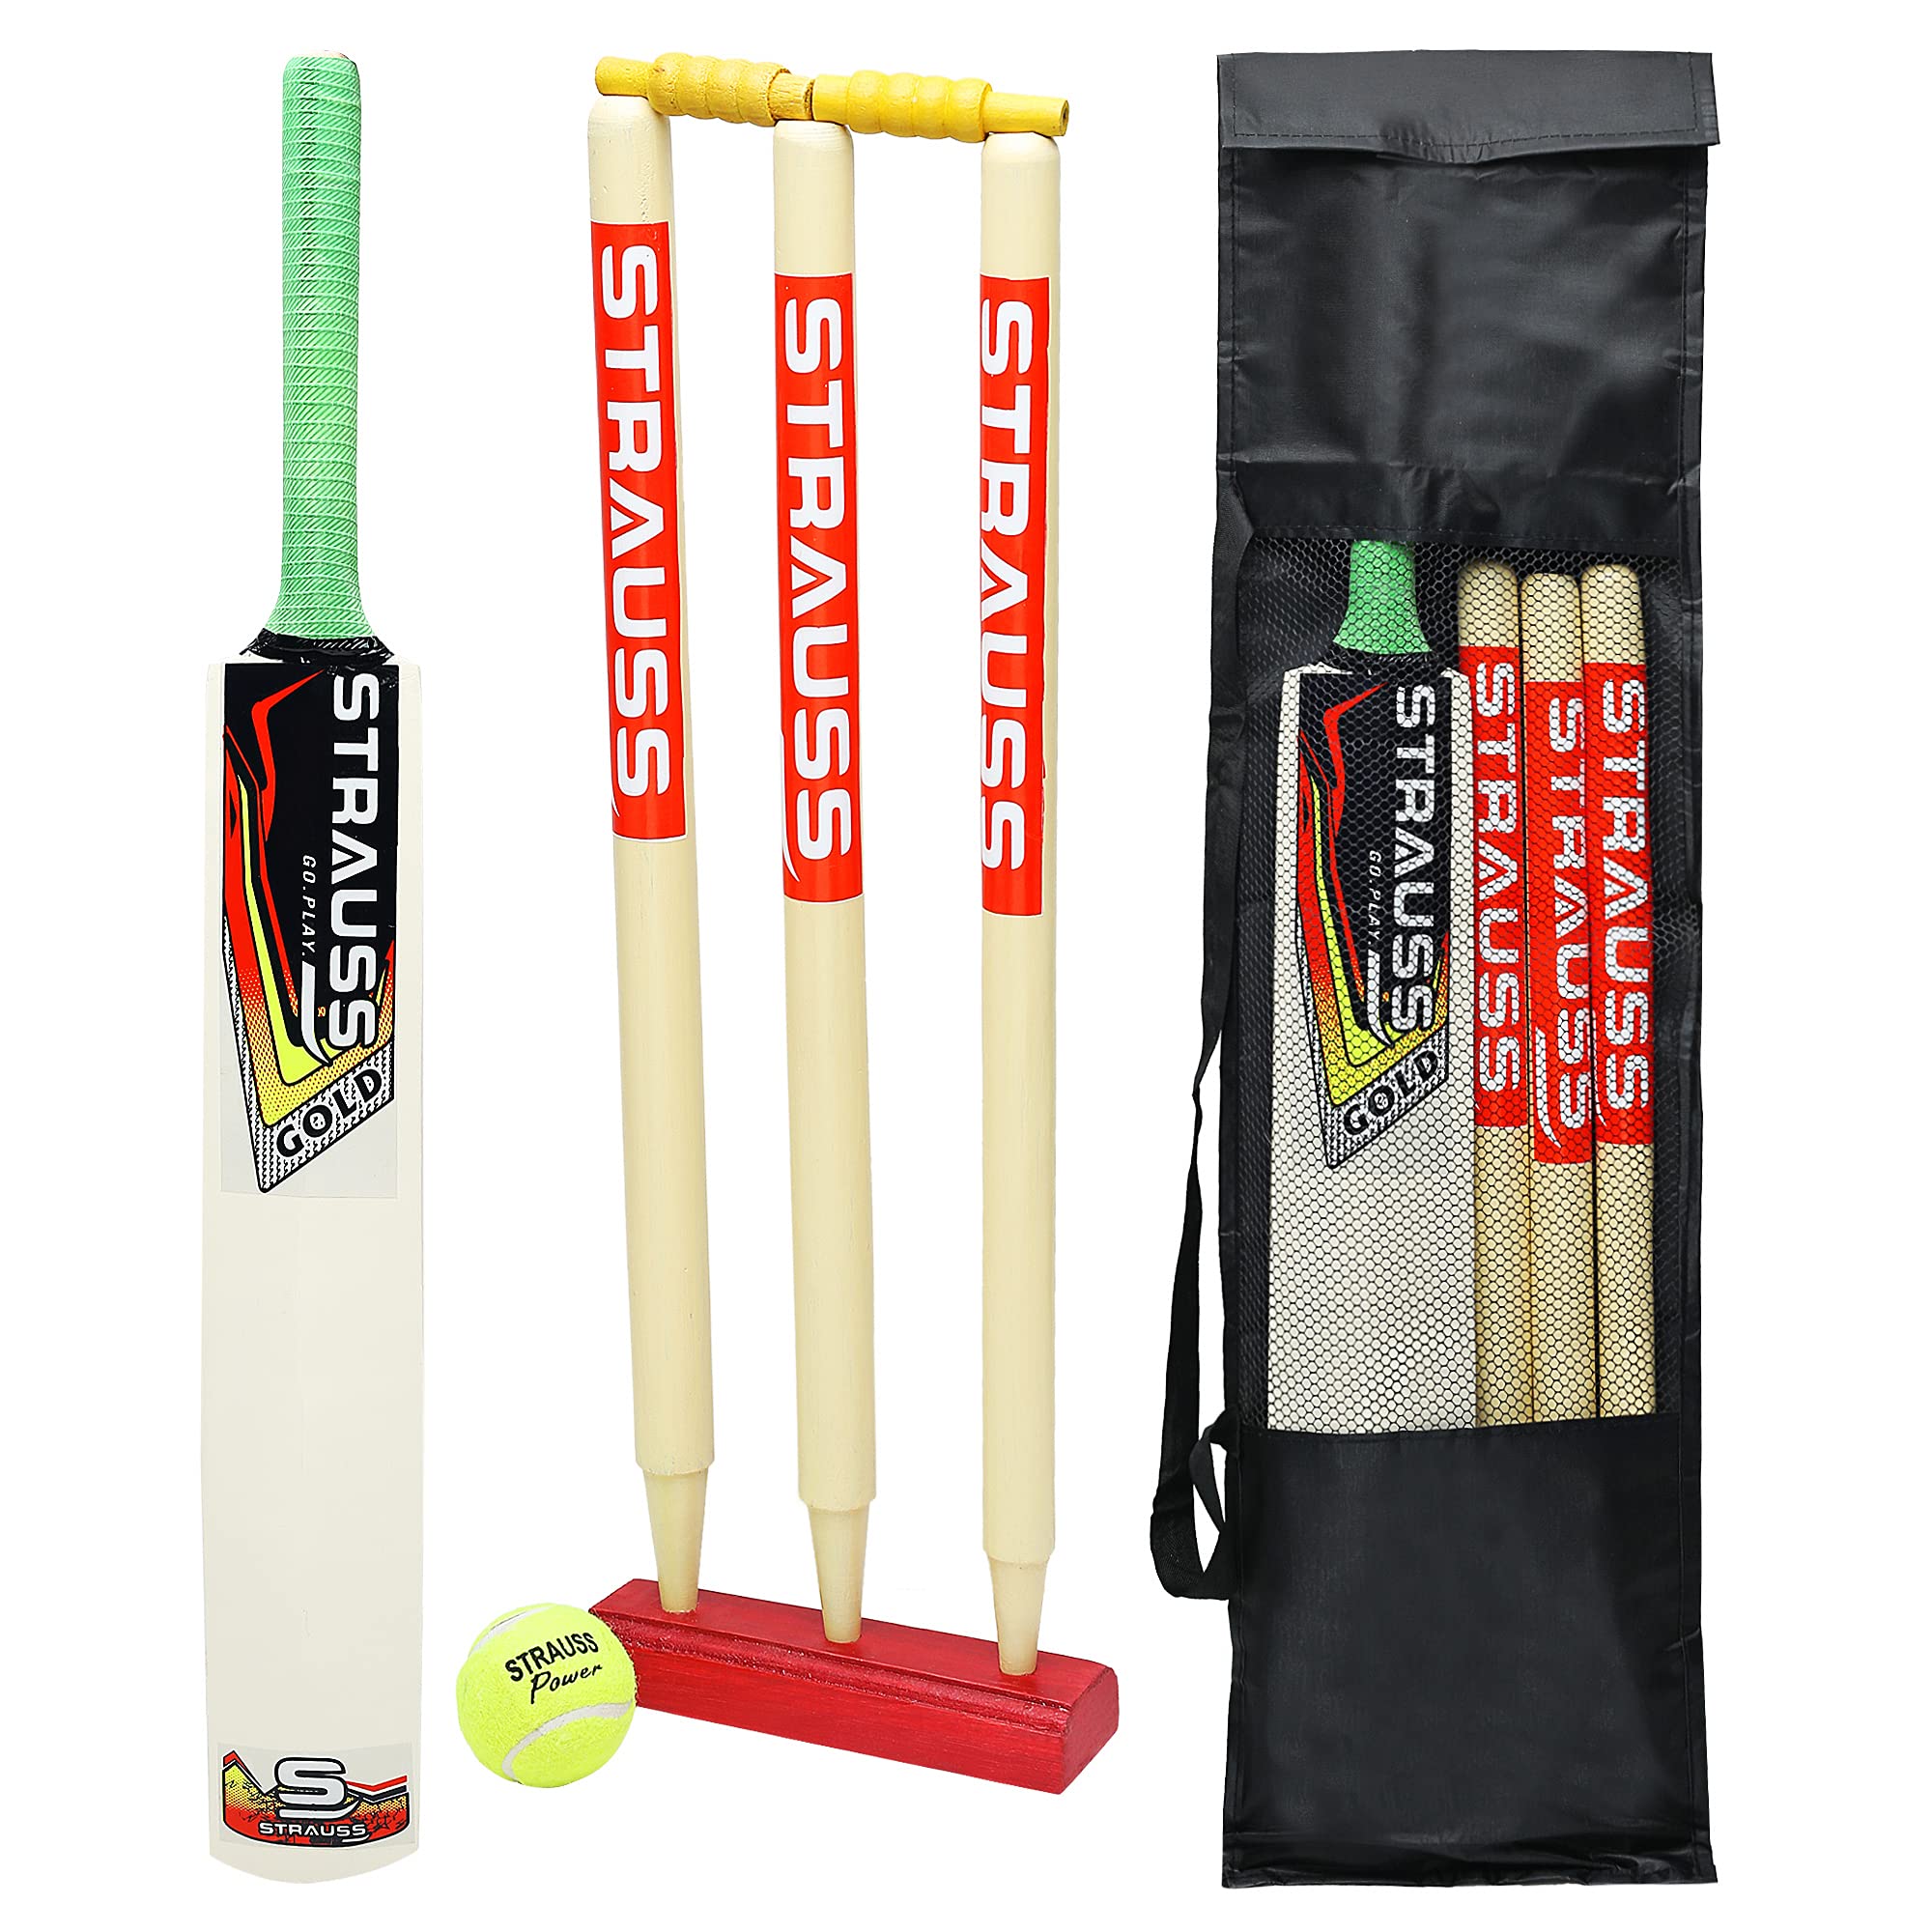 Strauss Cricket Kit, Size- 6 (Popular Willow bat+3 Stumps+Holder+1 Ball+Carry Bag)